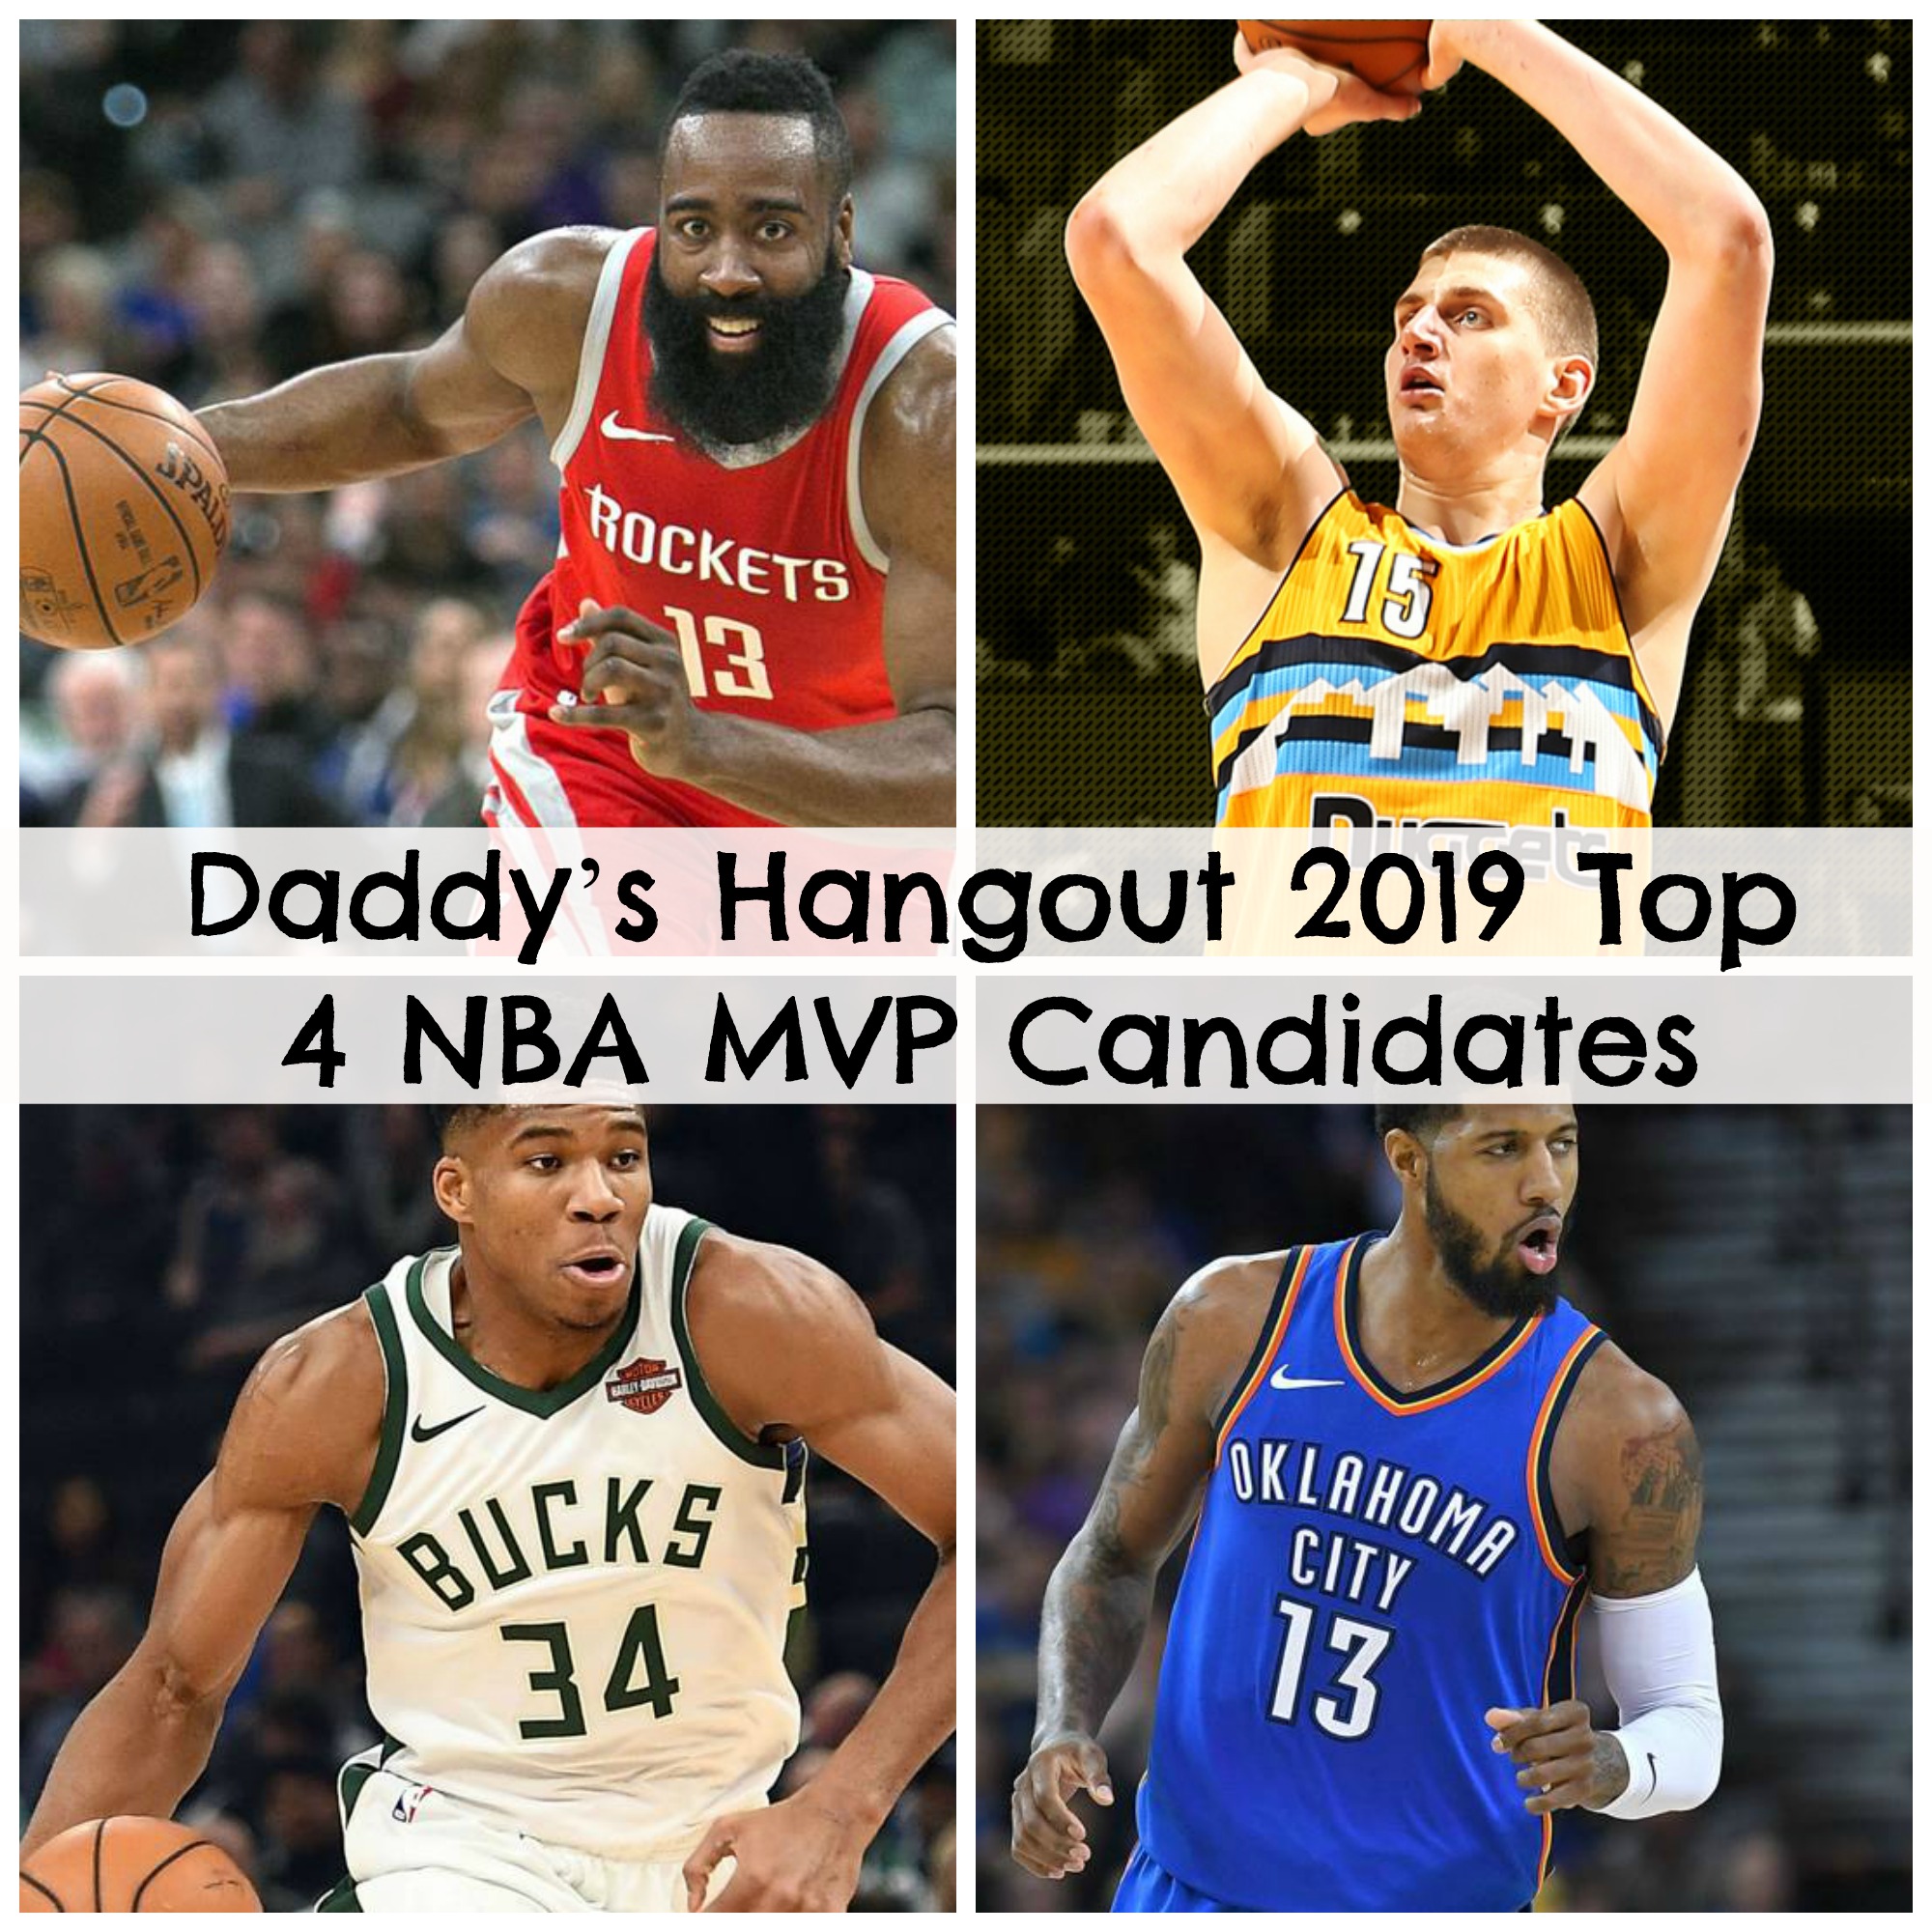 Daddy’s Hangout 2019 Top 4 NBA MVP Candidates